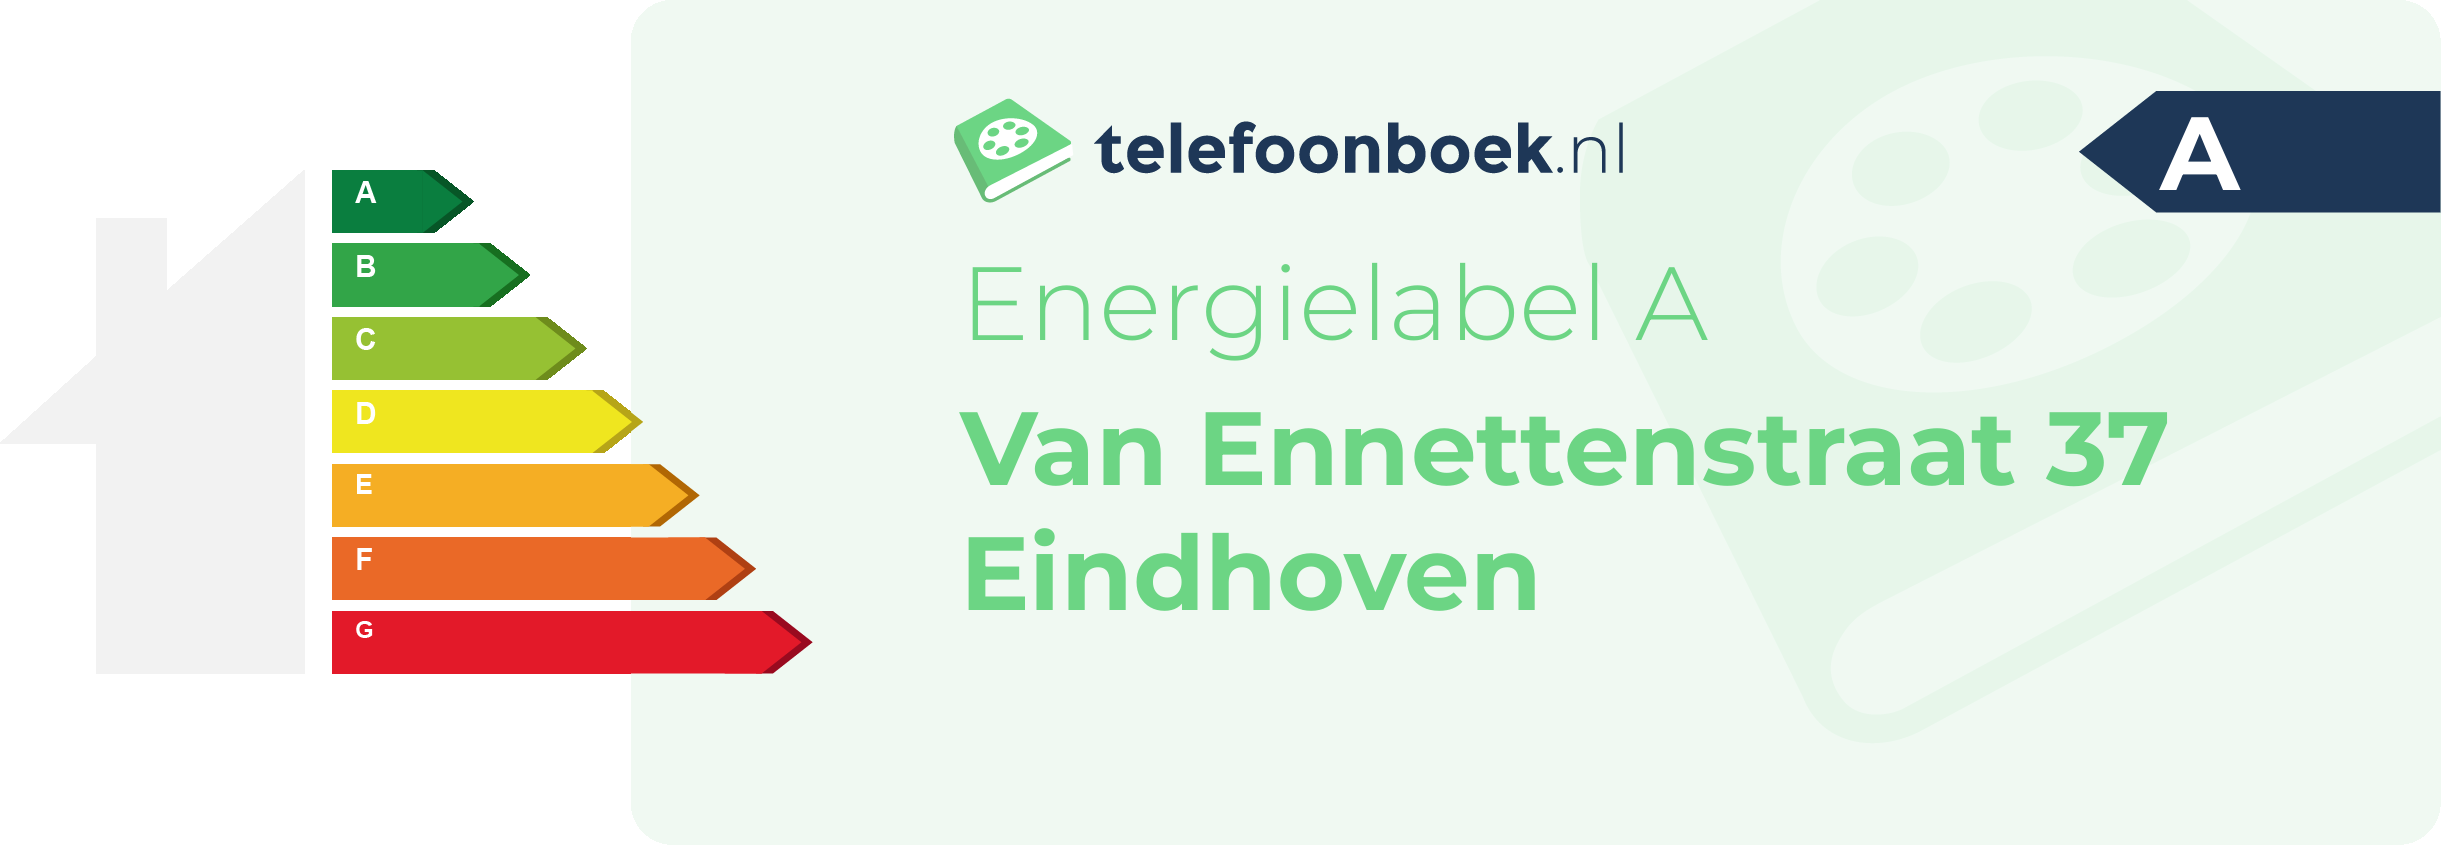 Energielabel Van Ennettenstraat 37 Eindhoven